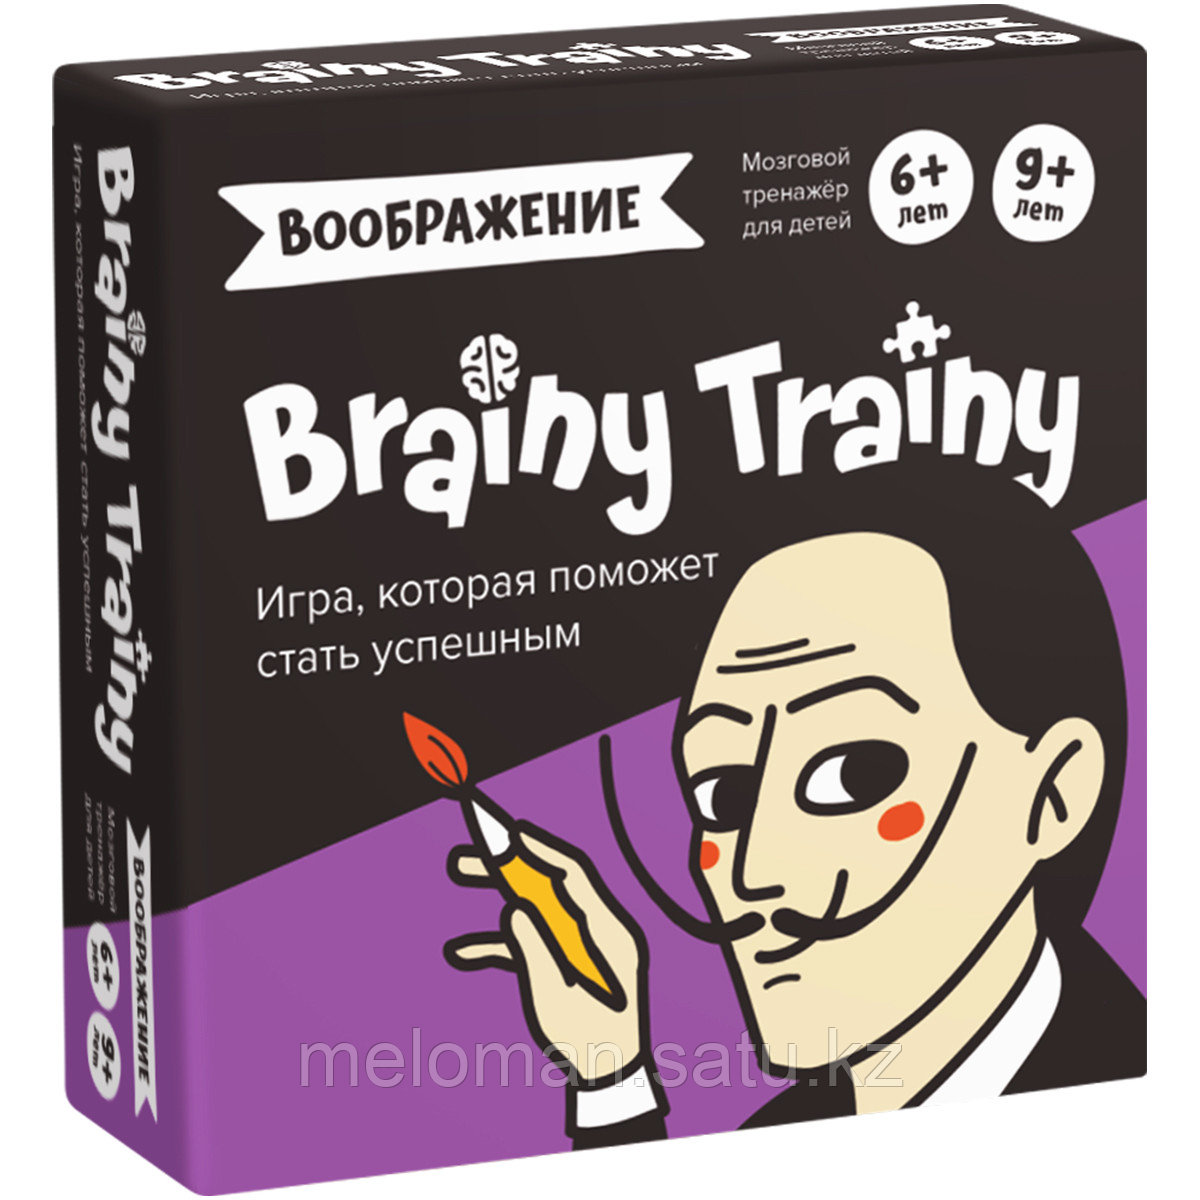 BRAINY TRAINY: Воображение